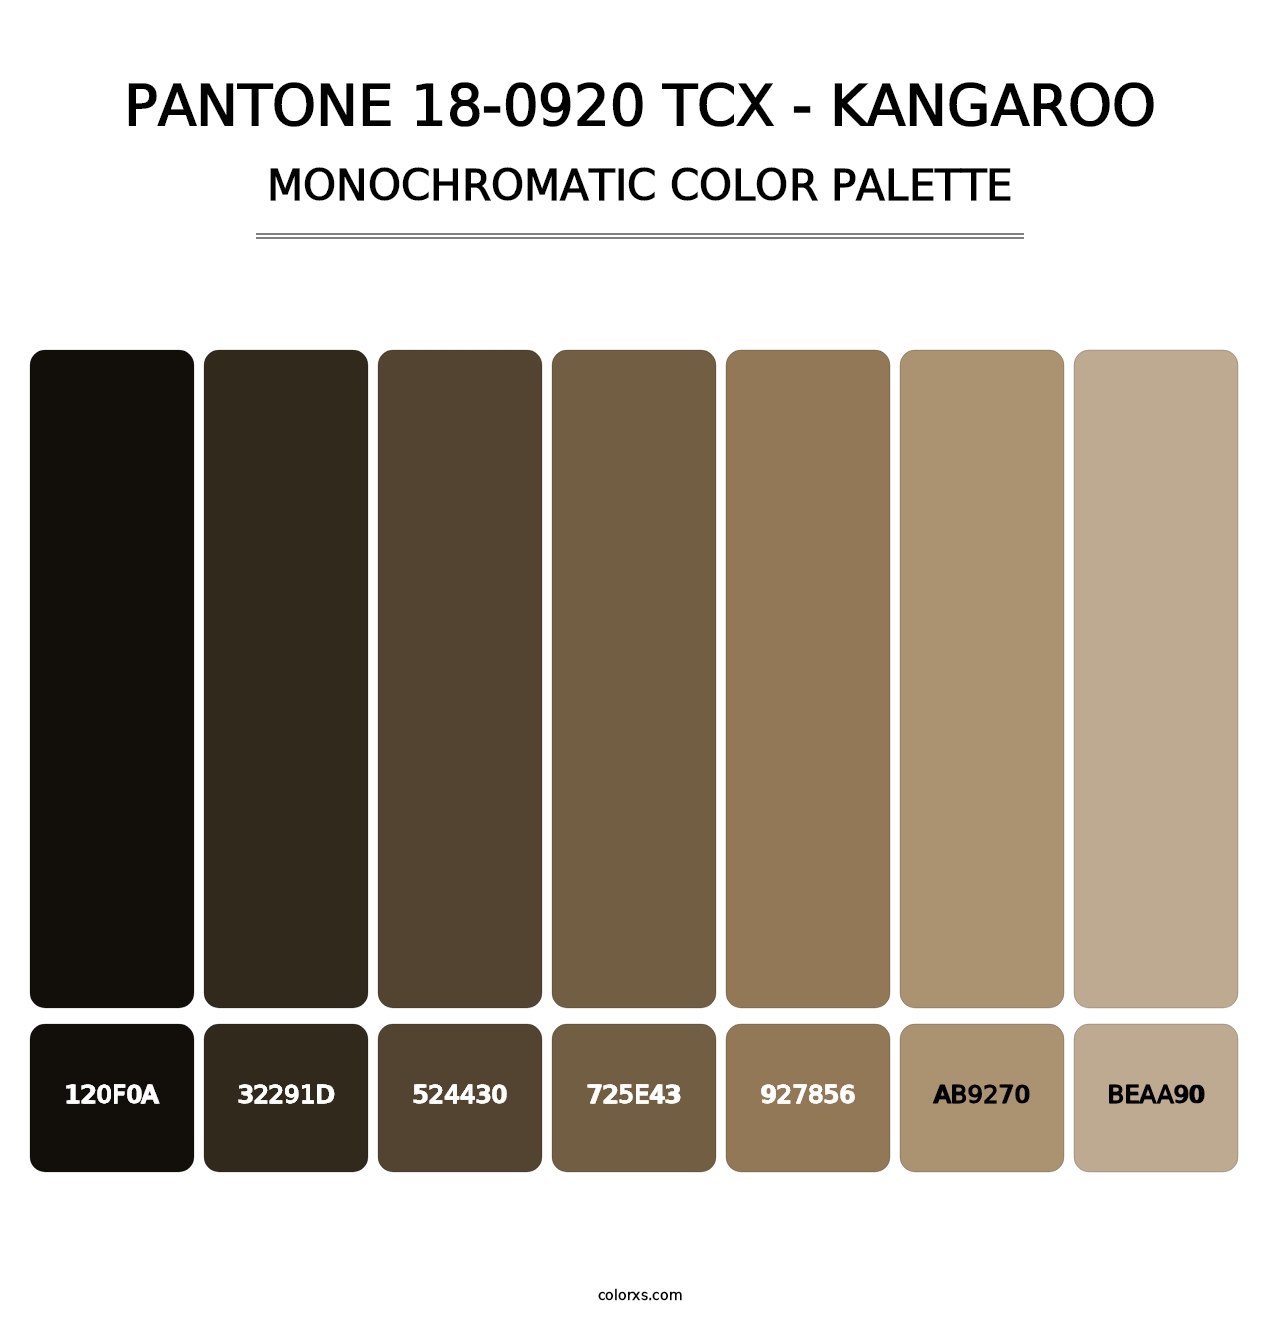 PANTONE 18-0920 TCX - Kangaroo - Monochromatic Color Palette